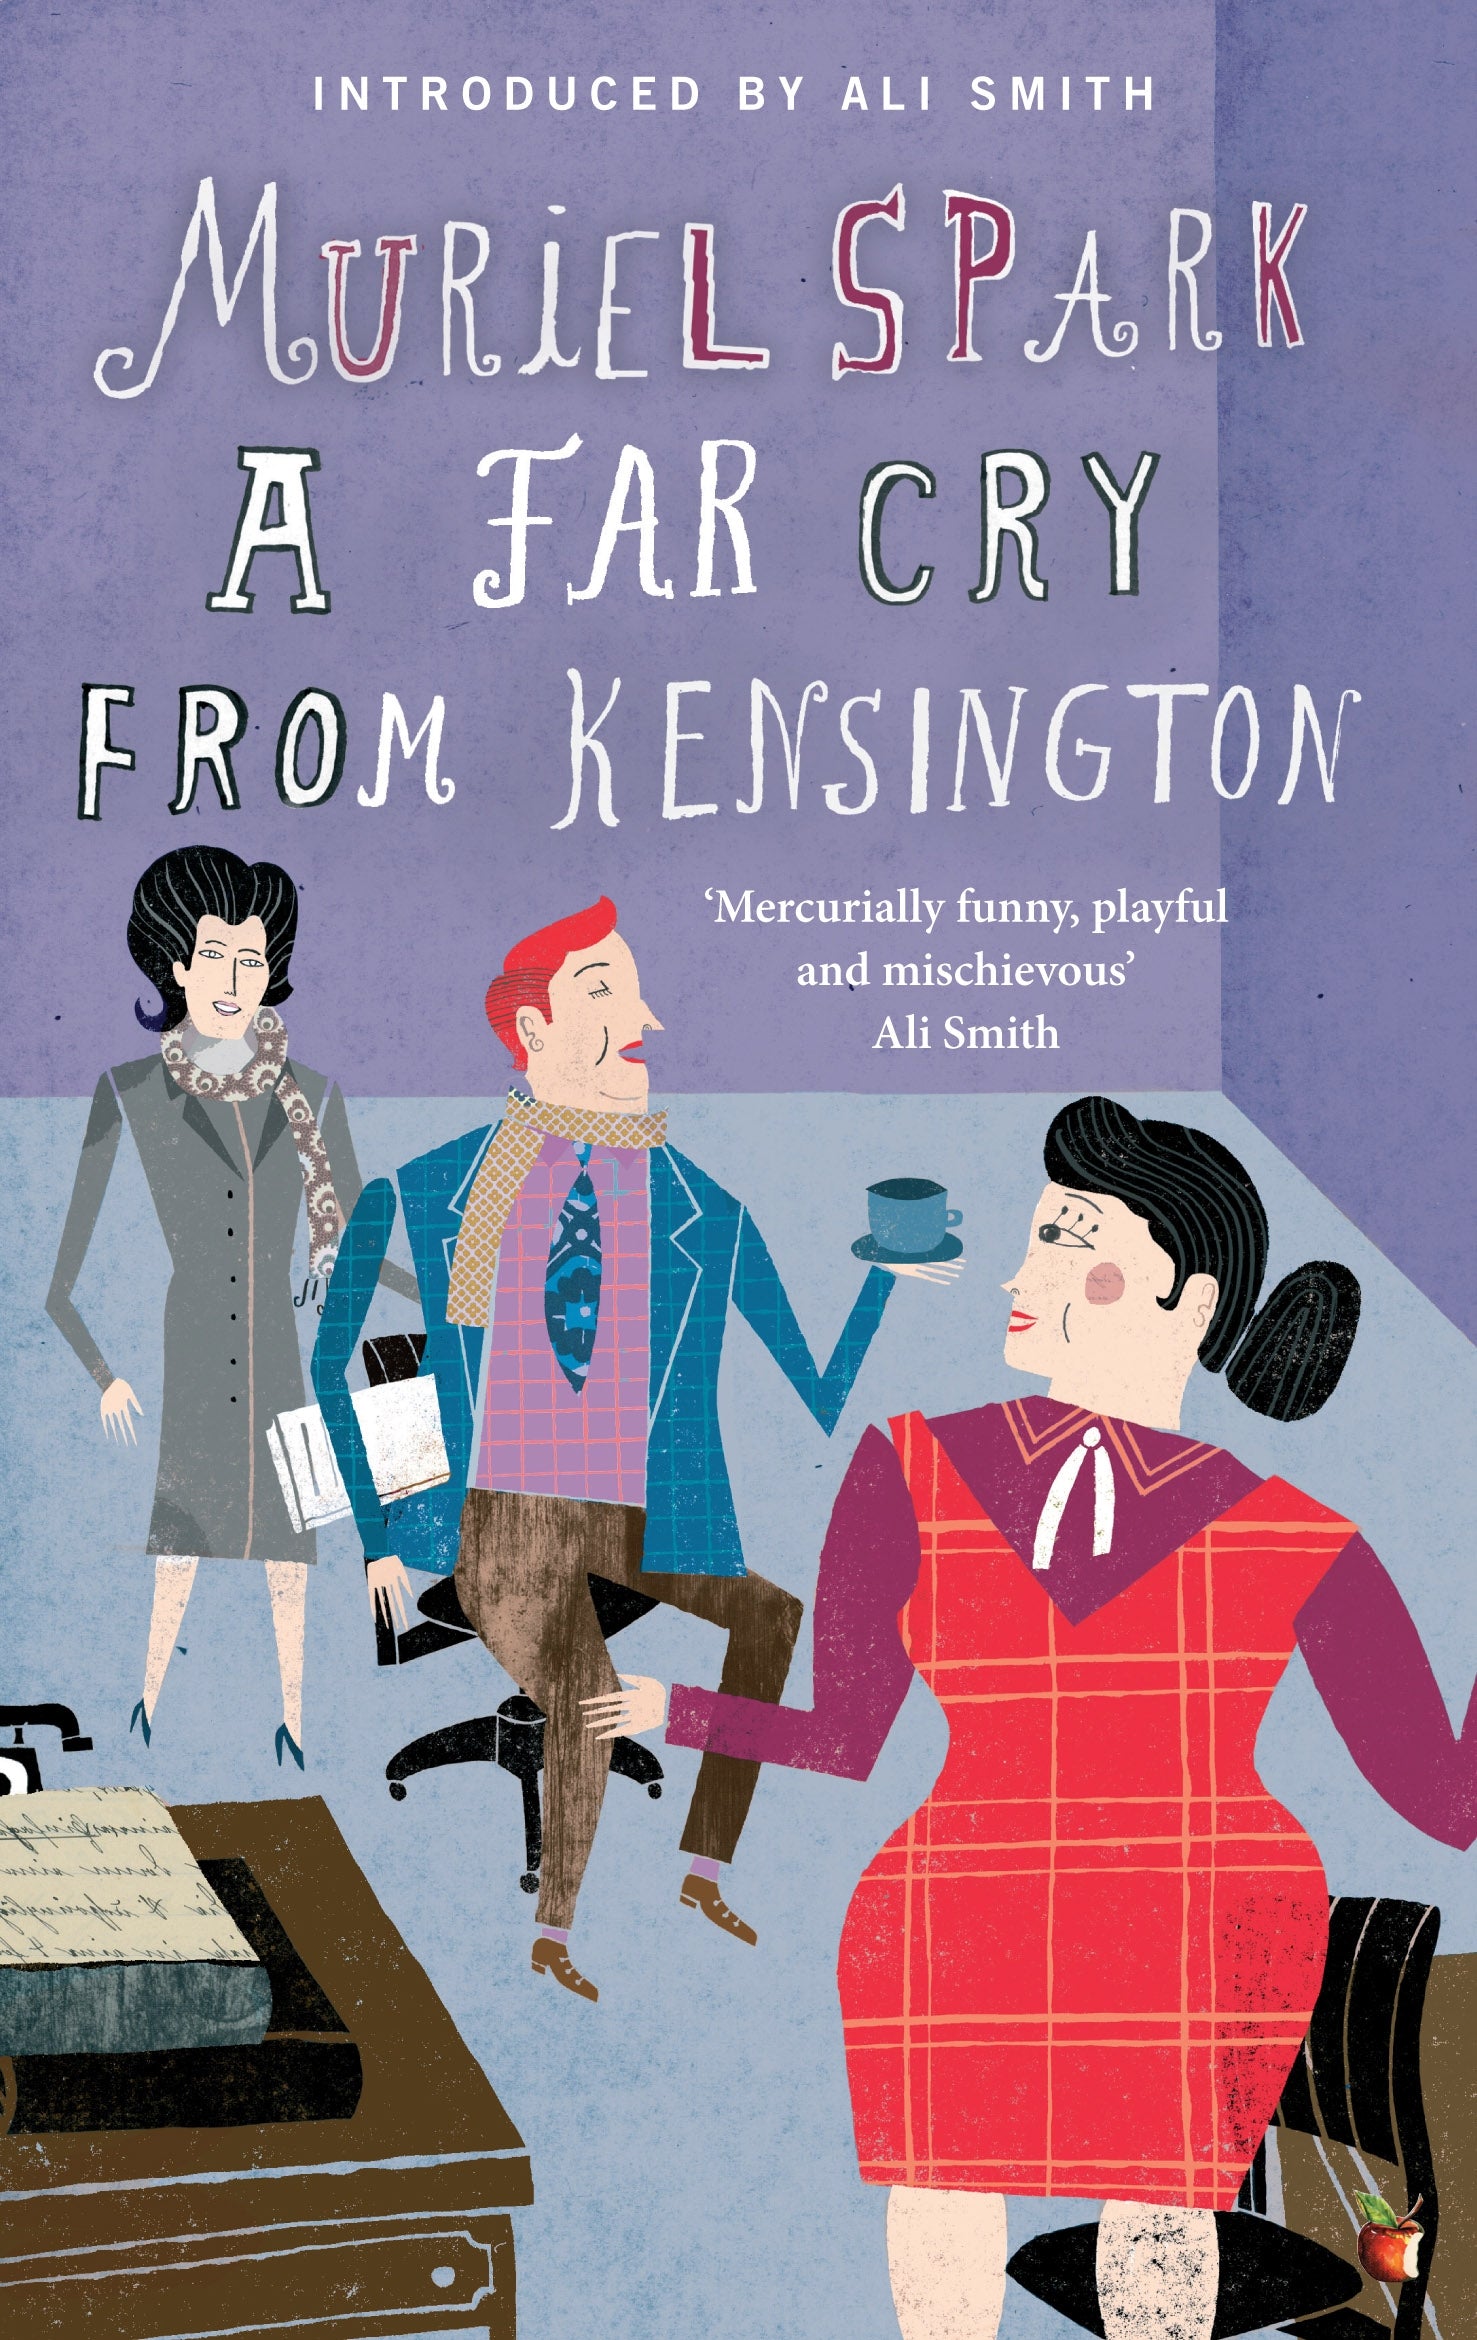 A Far Cry From Kensington by Muriel Spark